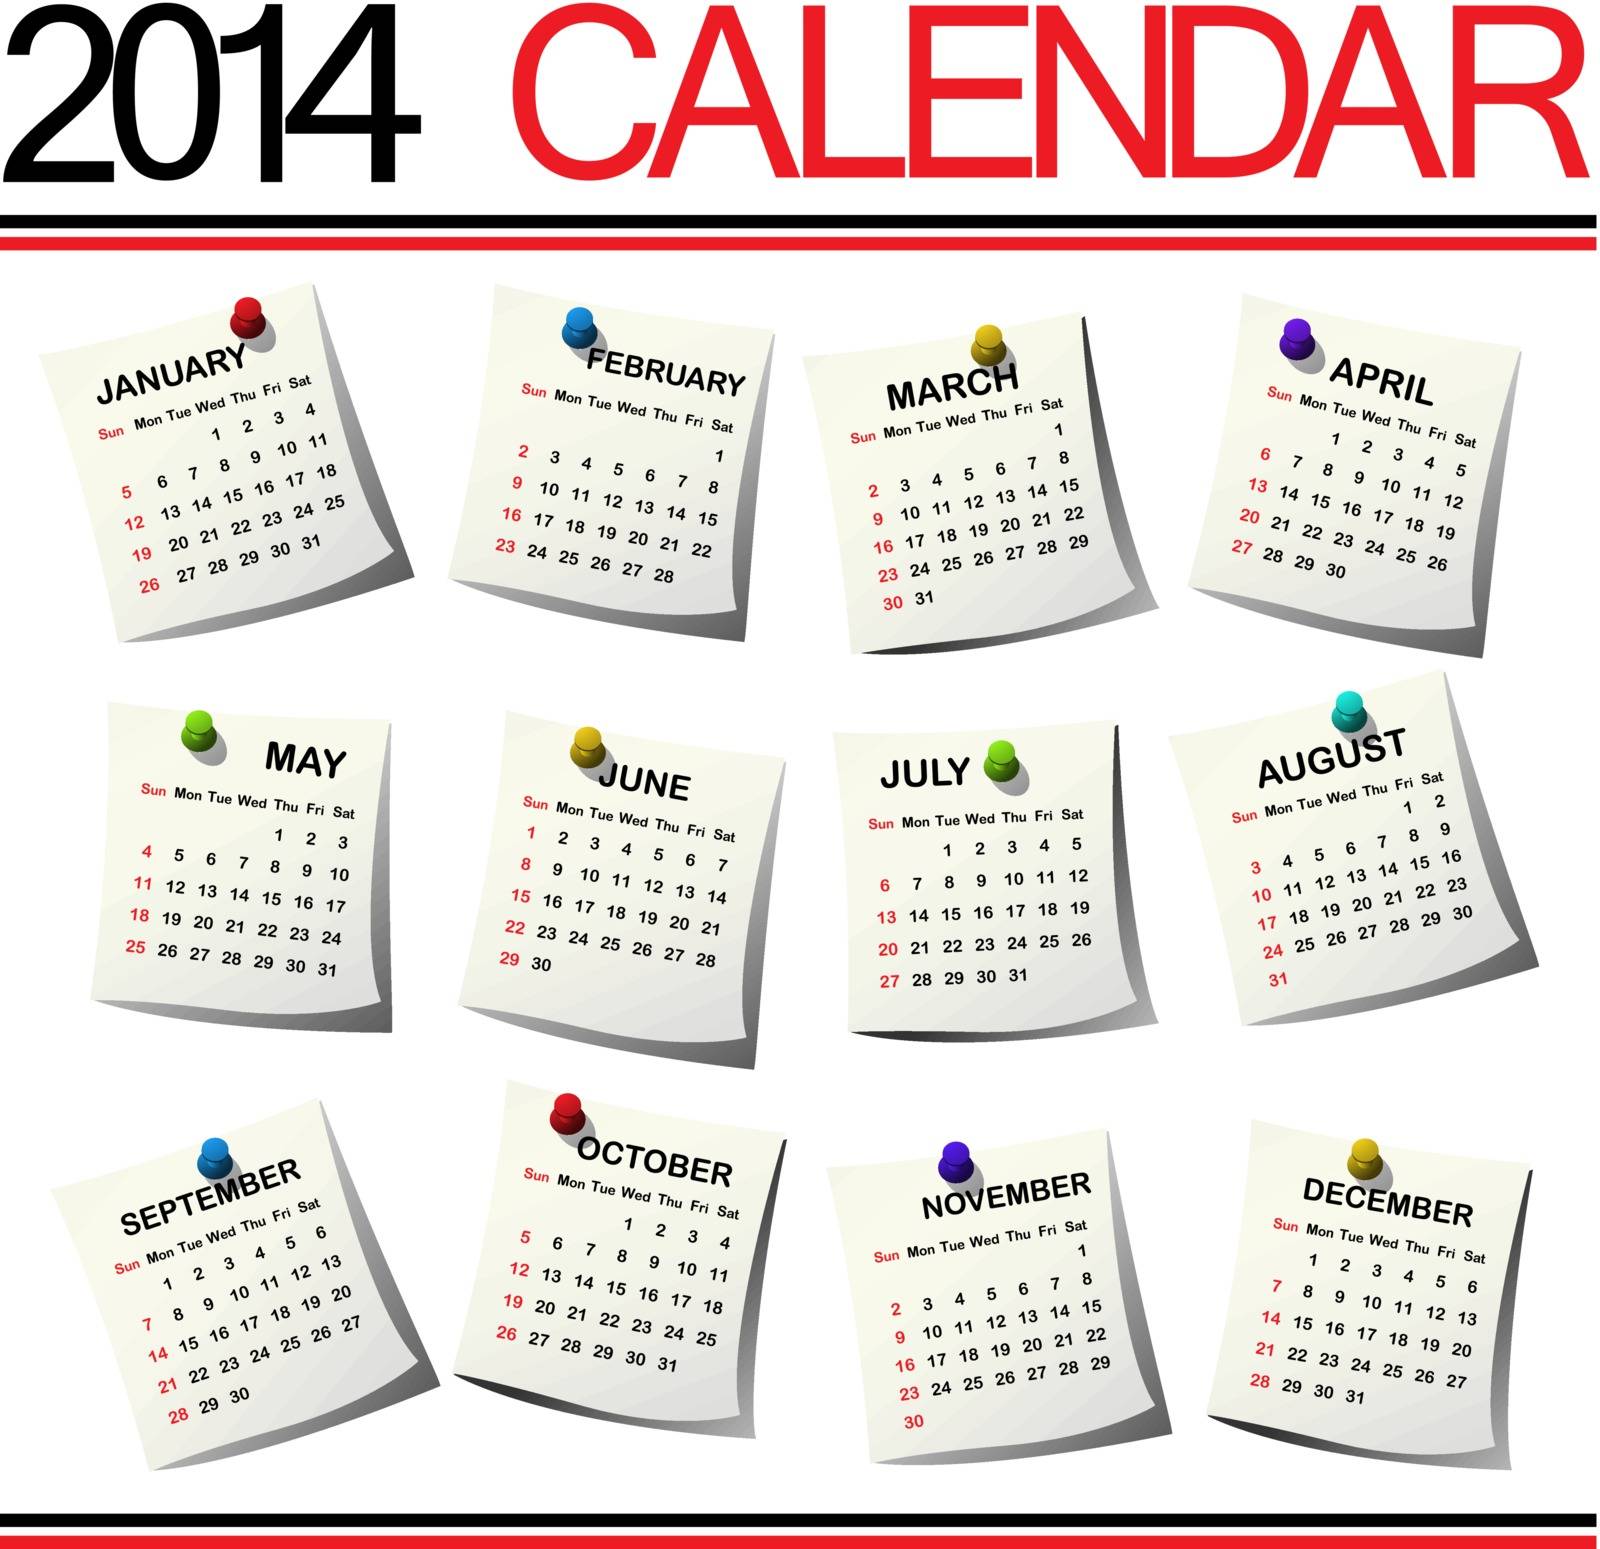 2014 Calendar by Lirch